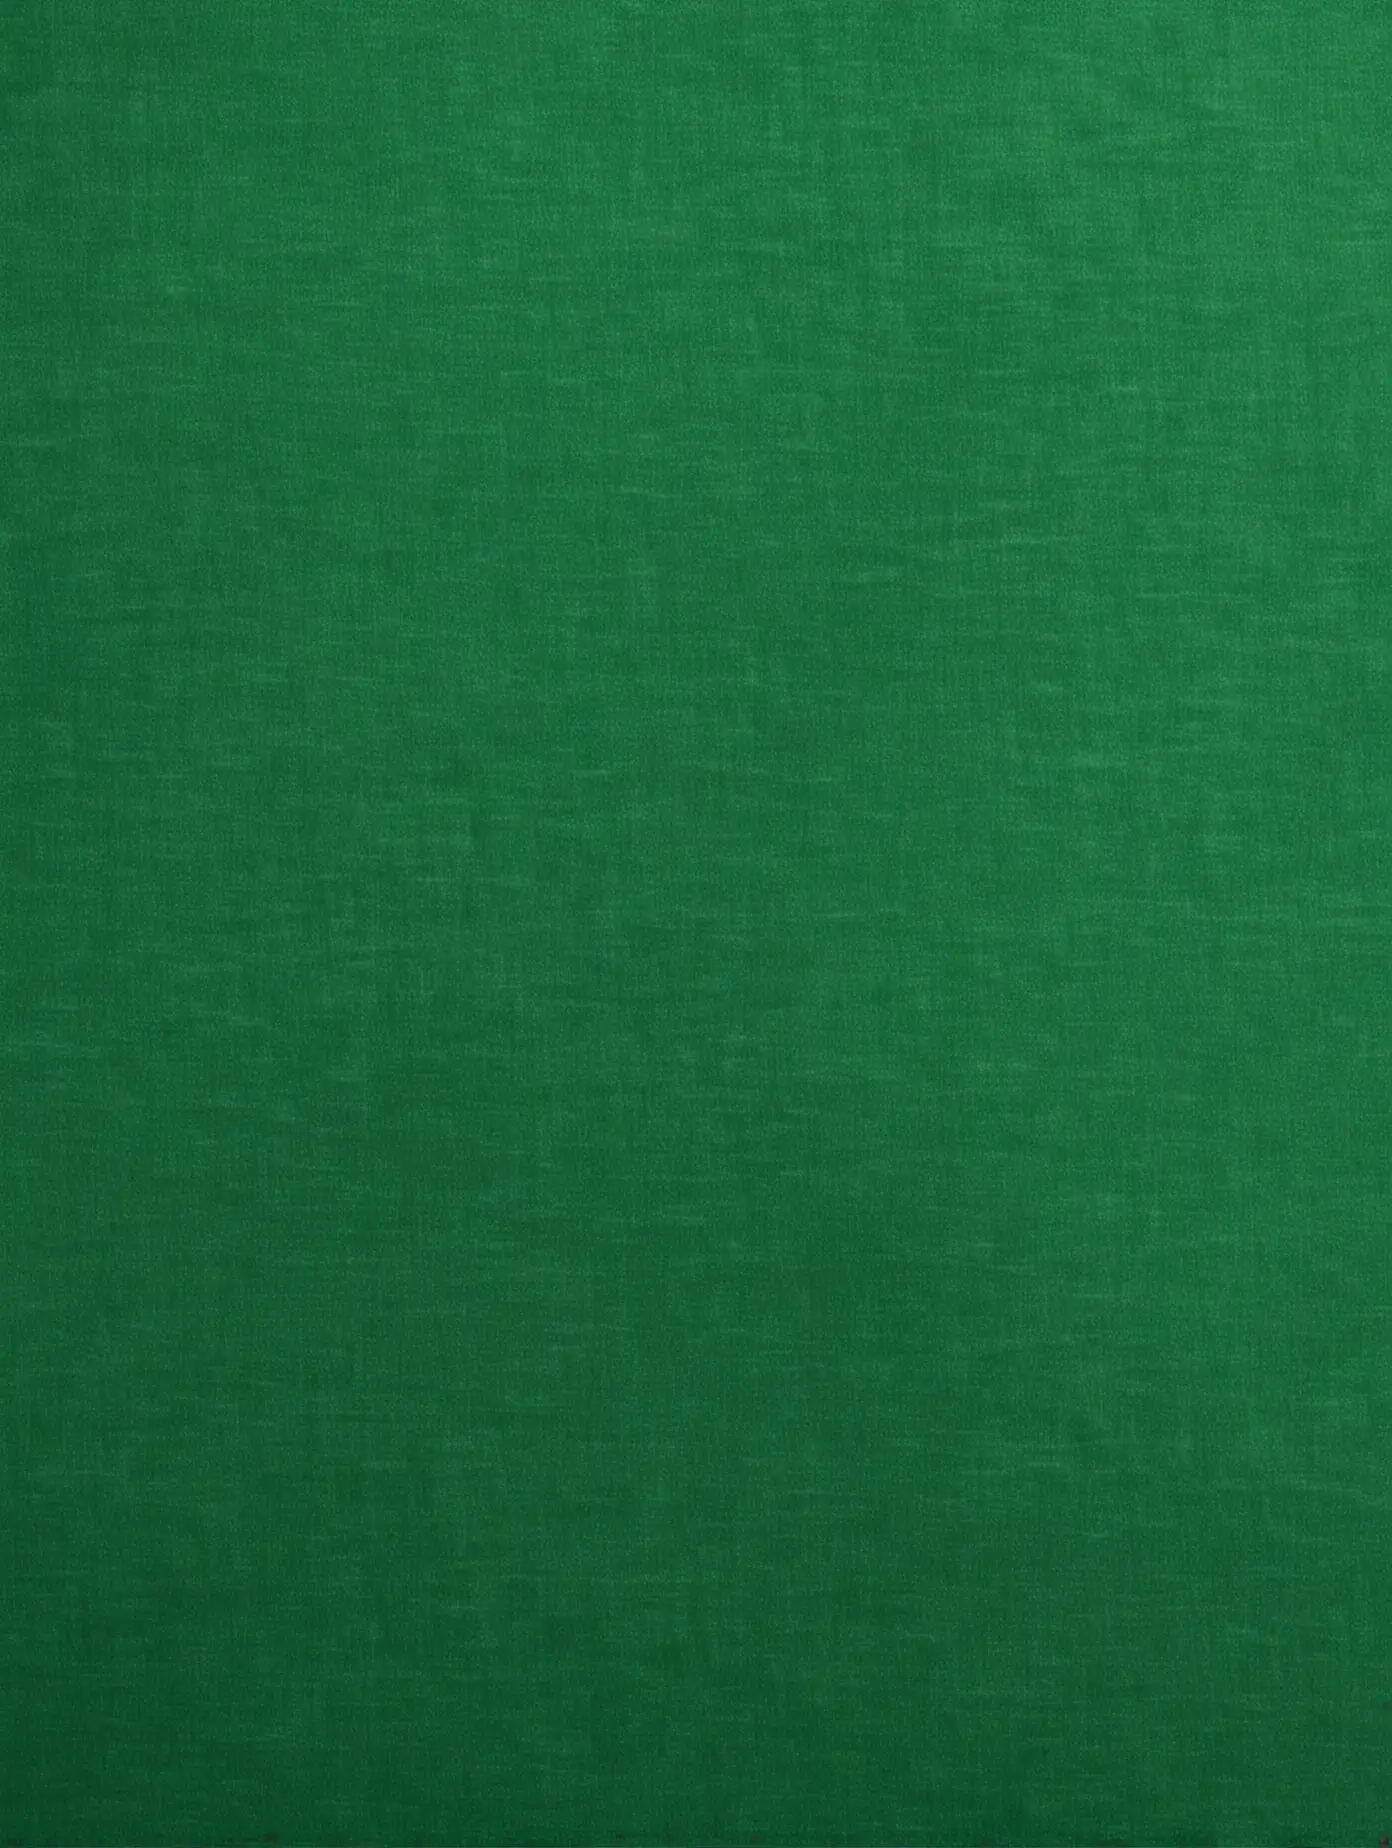  green-emerald background